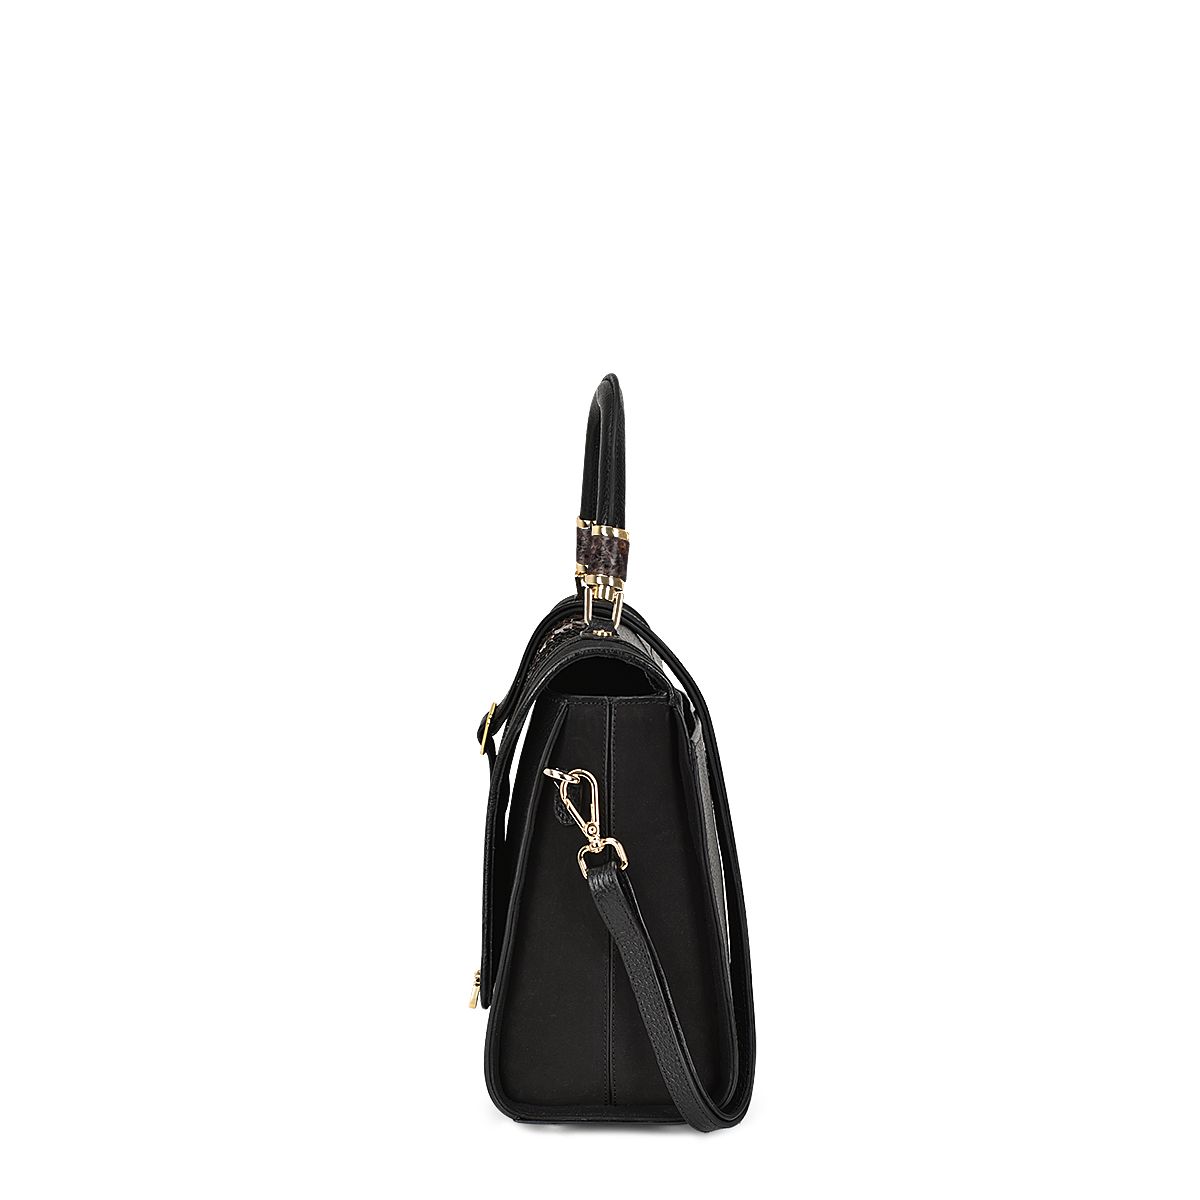 BOD33PI - Cuadra brown dress fashion python handbag for women-Kuet.us